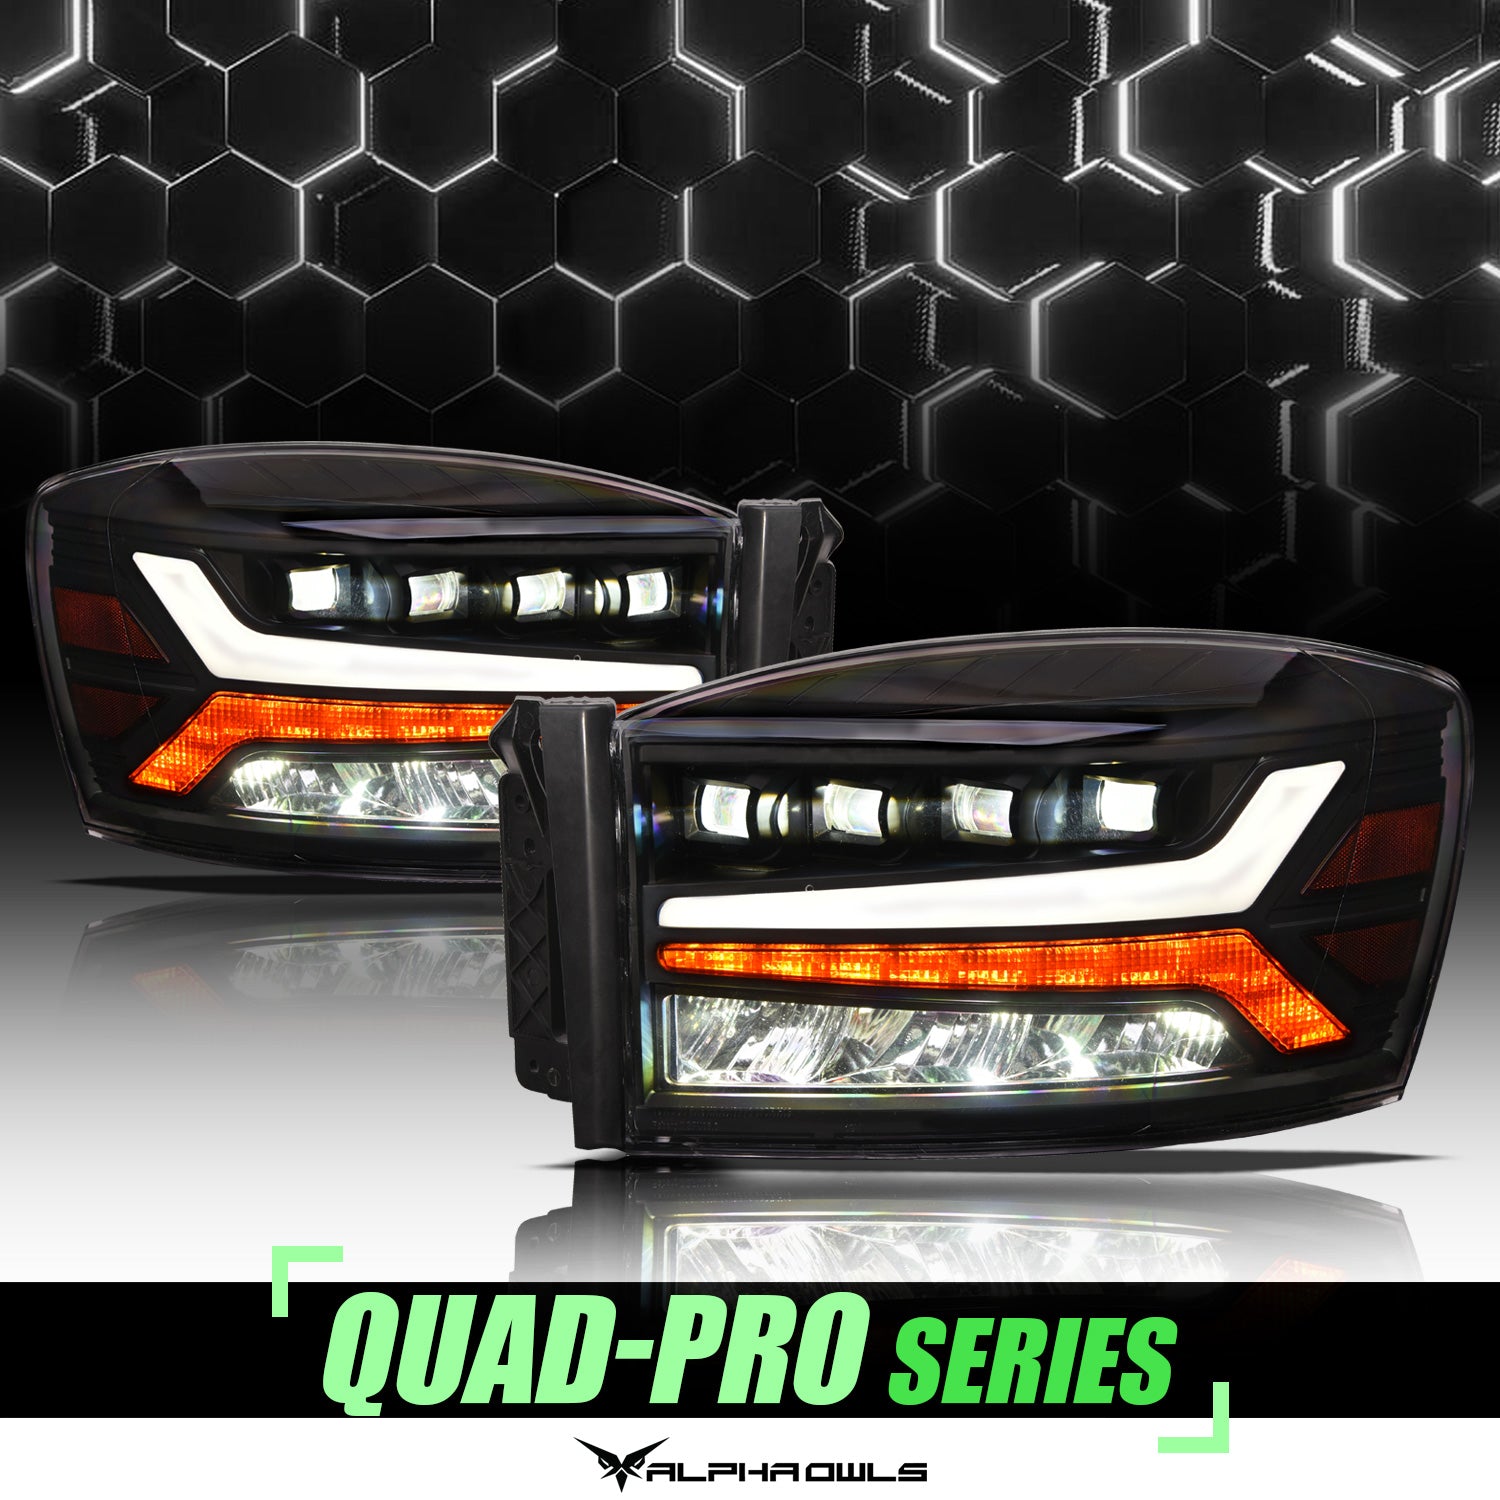 Alpha Owls 2006-2008 Dodge Ram 1500 Quad-Pro Series LED Projector